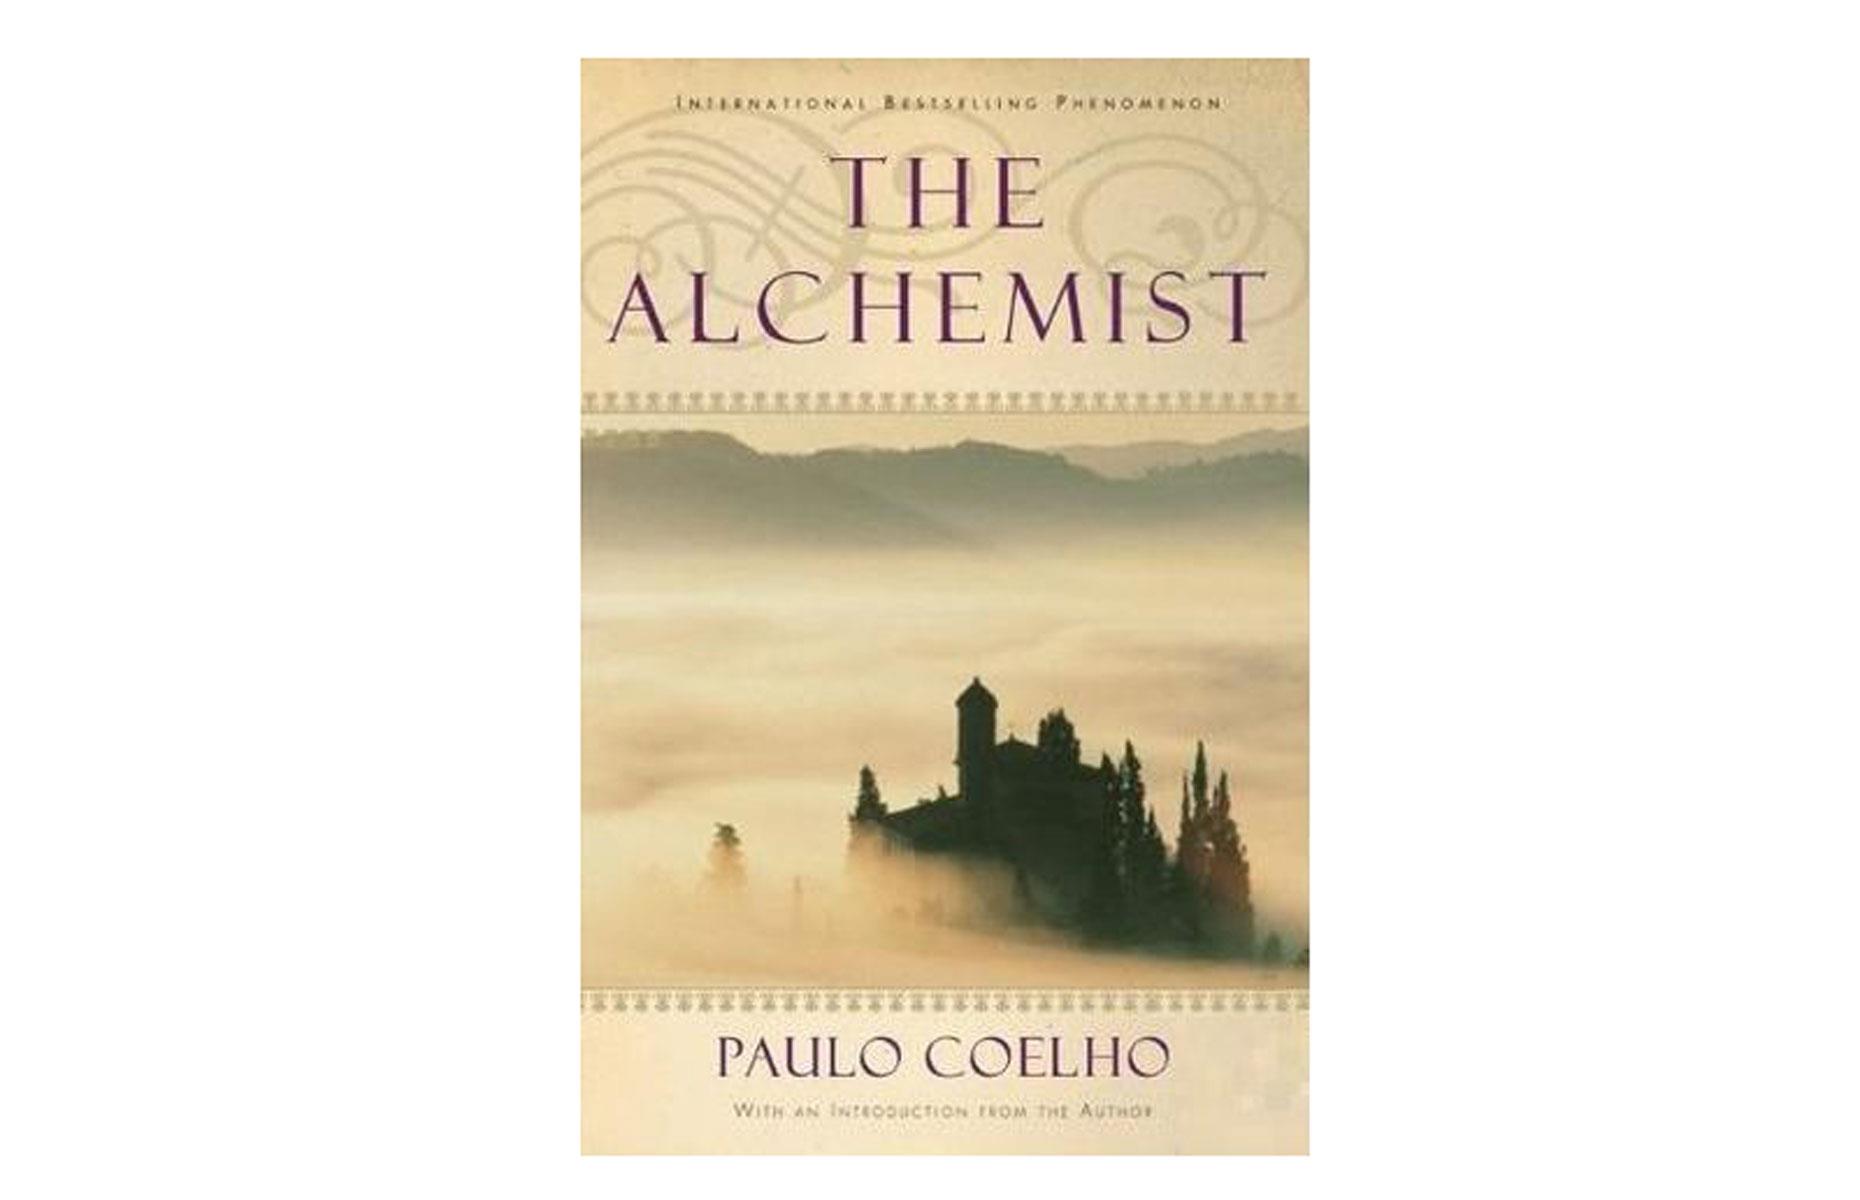 1990s: The Alchemist by Paulo Coelho